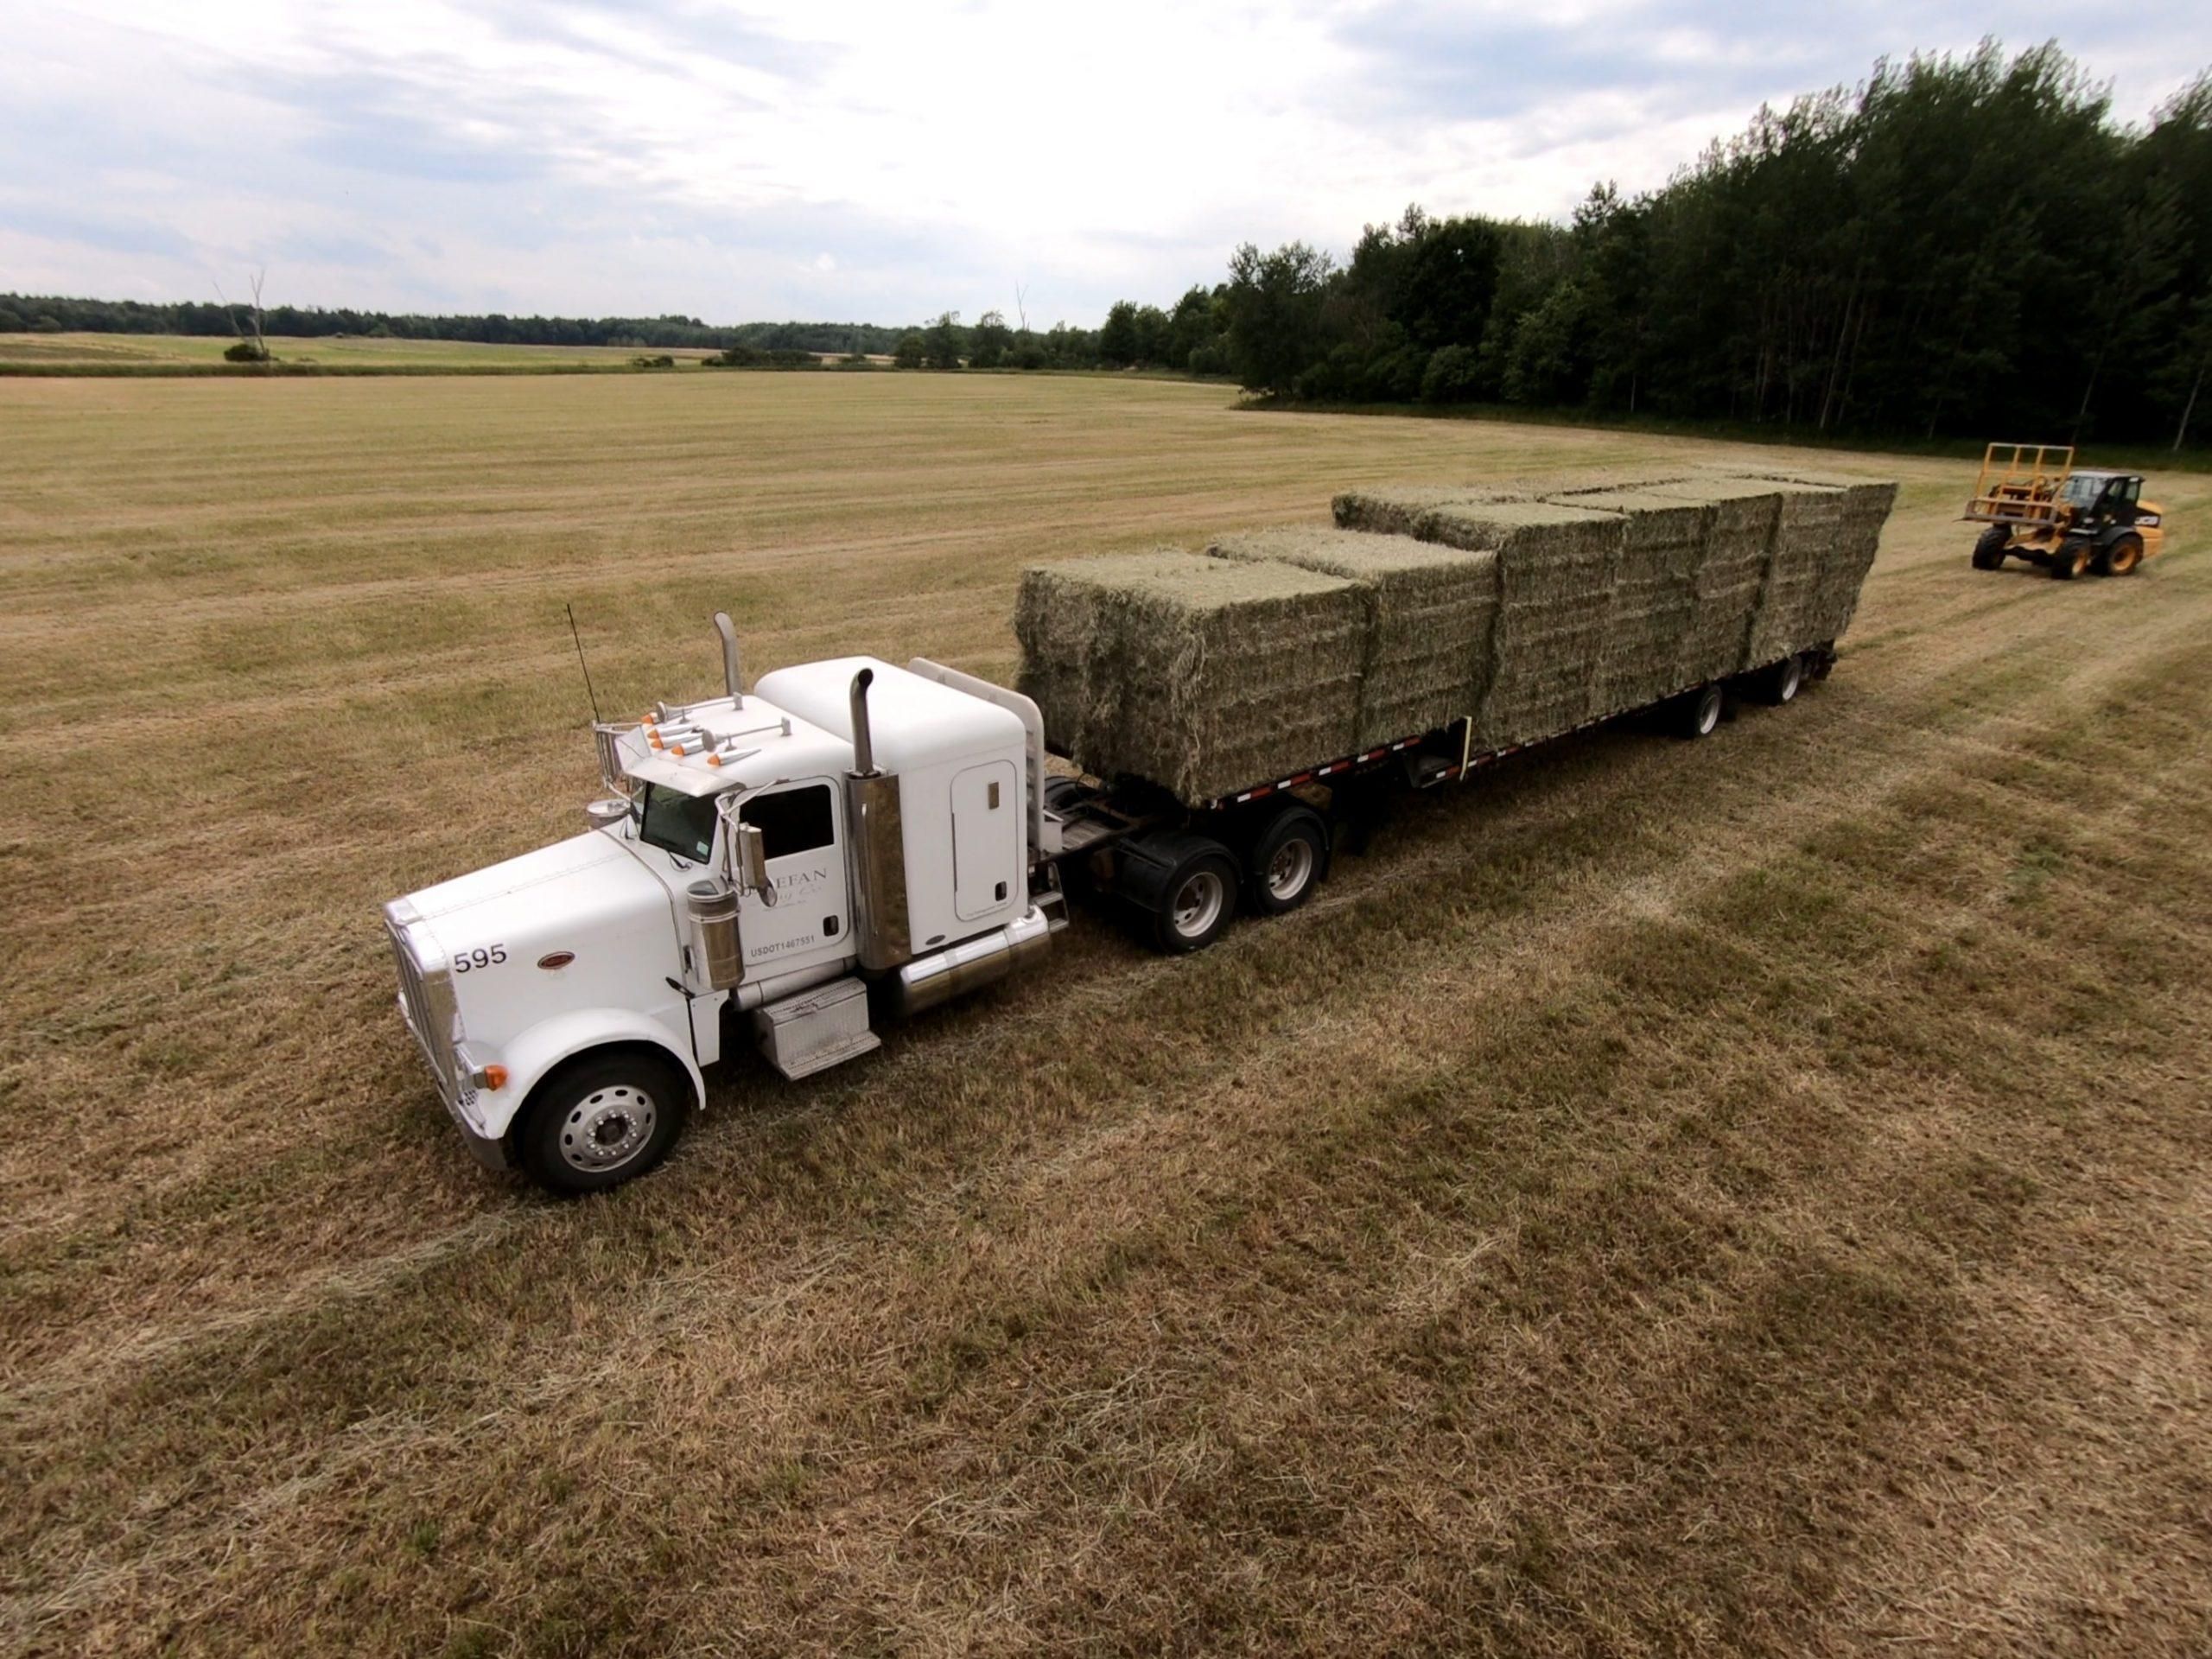 Trucks carrying hay bundles